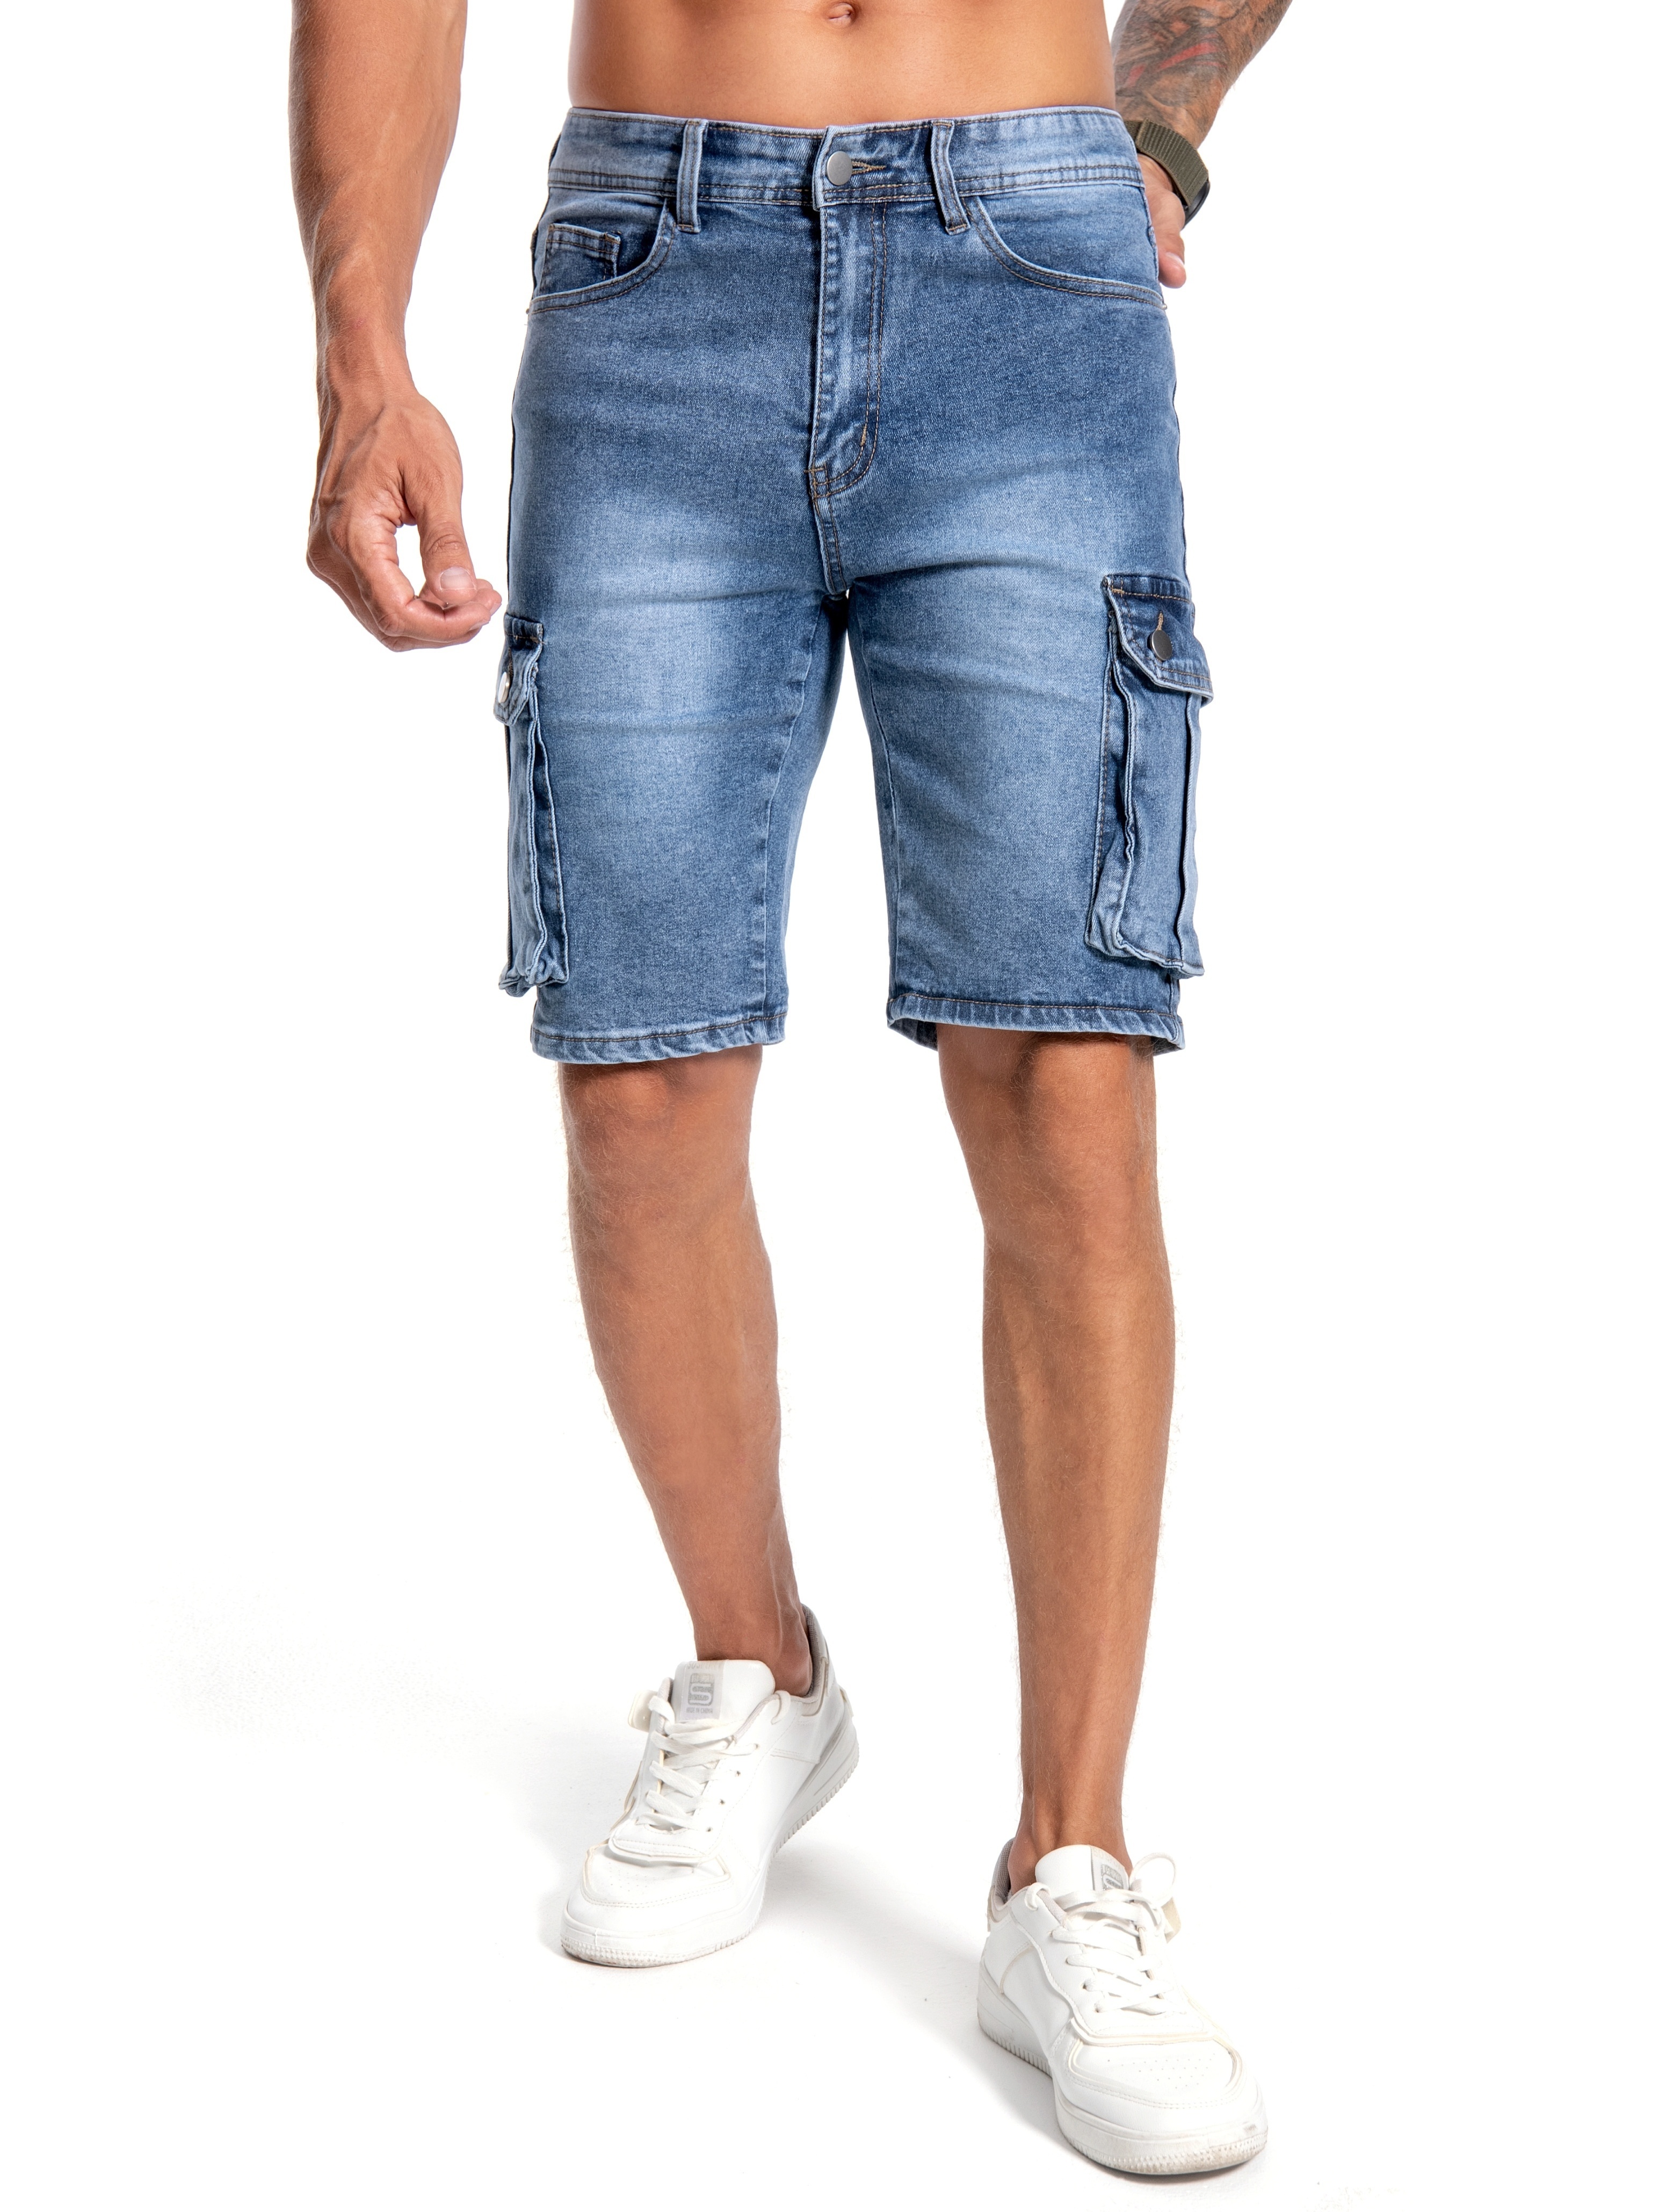 Men's Jean Shorts: Shop Denim Short Styles for Men